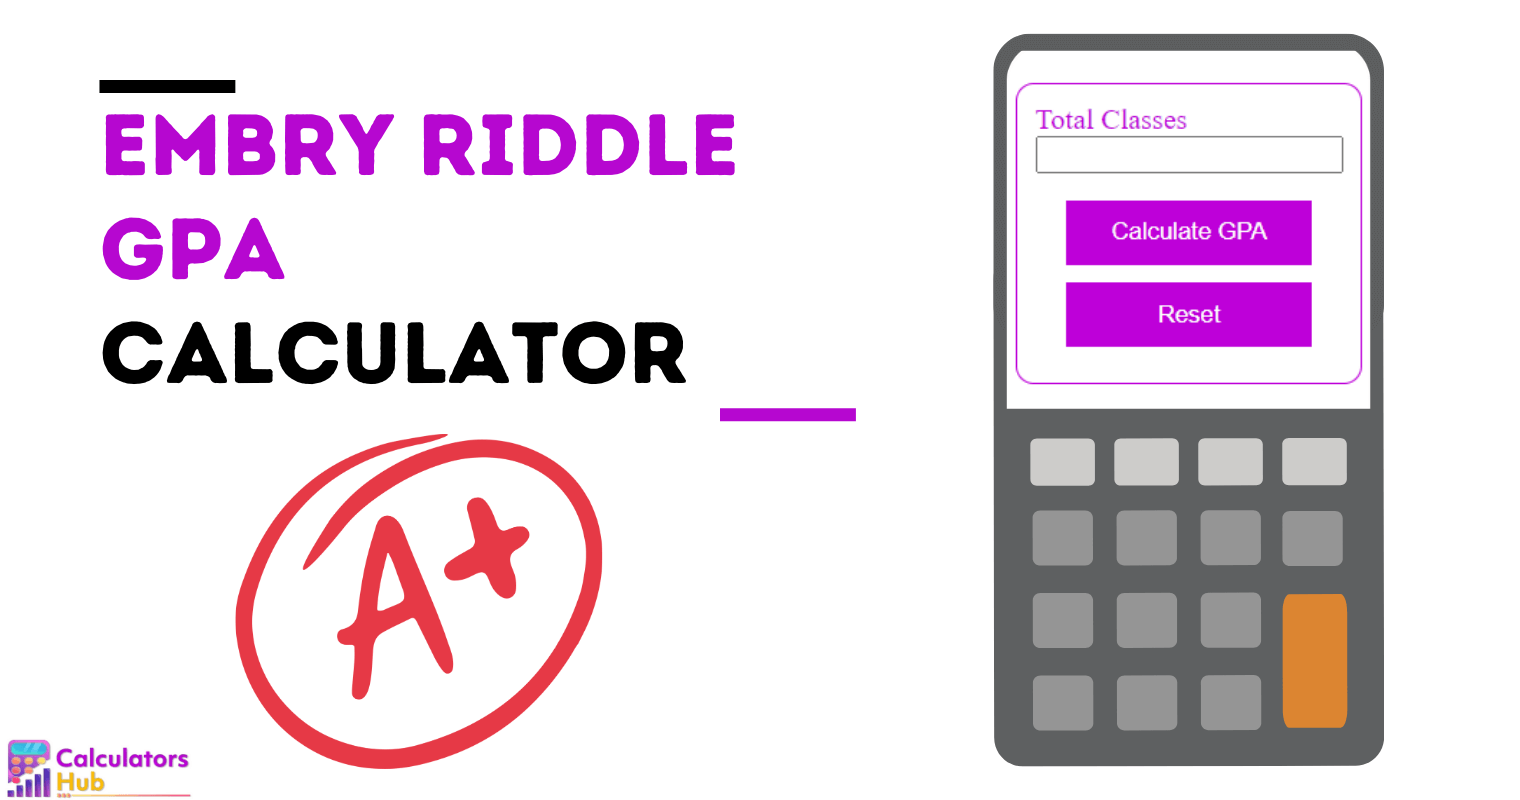 Embry Riddle GPA Calculator